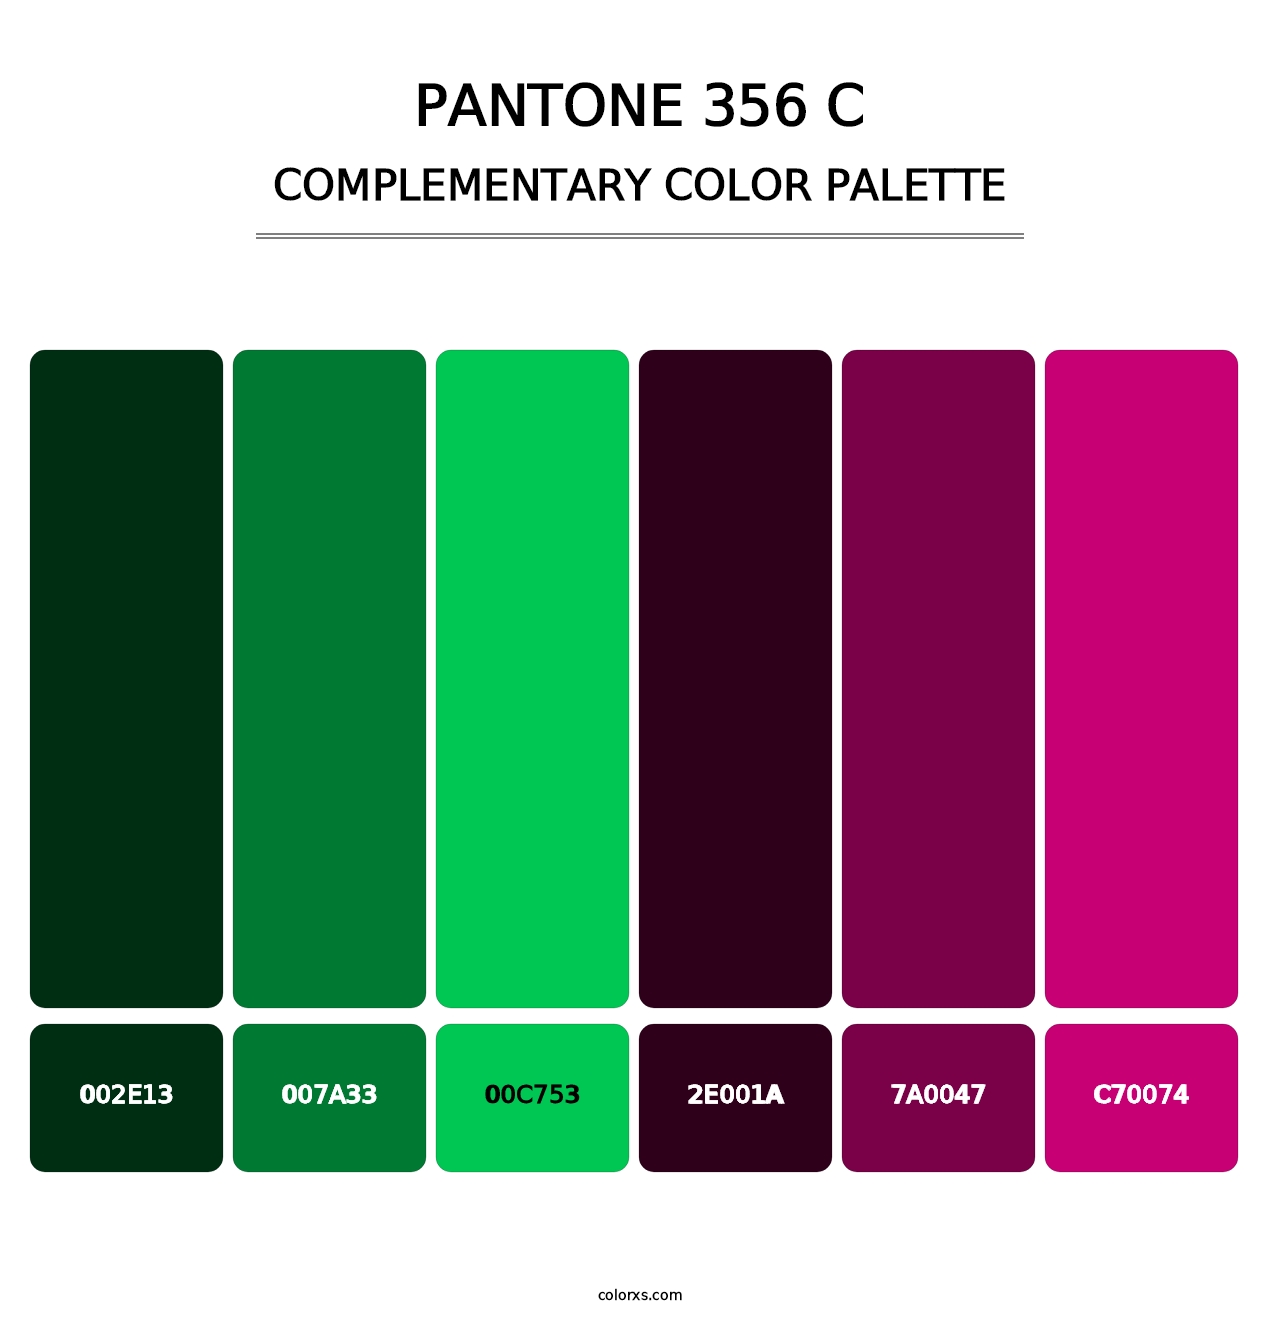 PANTONE 356 C - Complementary Color Palette